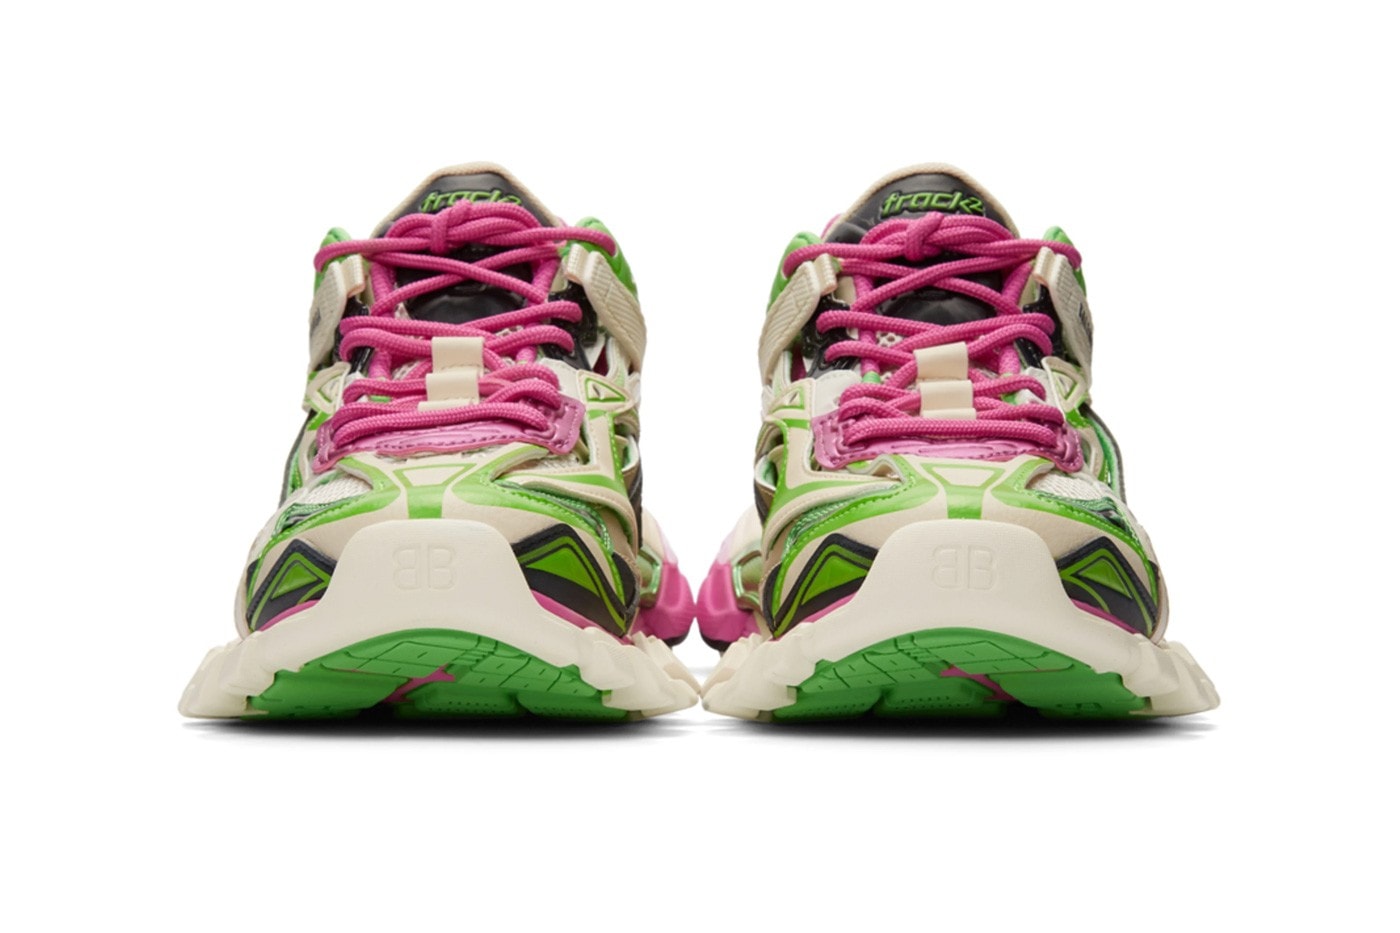 Balenciaga Track.2 Sneaker Pink White Green Caging Futuristic Trainer Shoe Layered Design Colorway